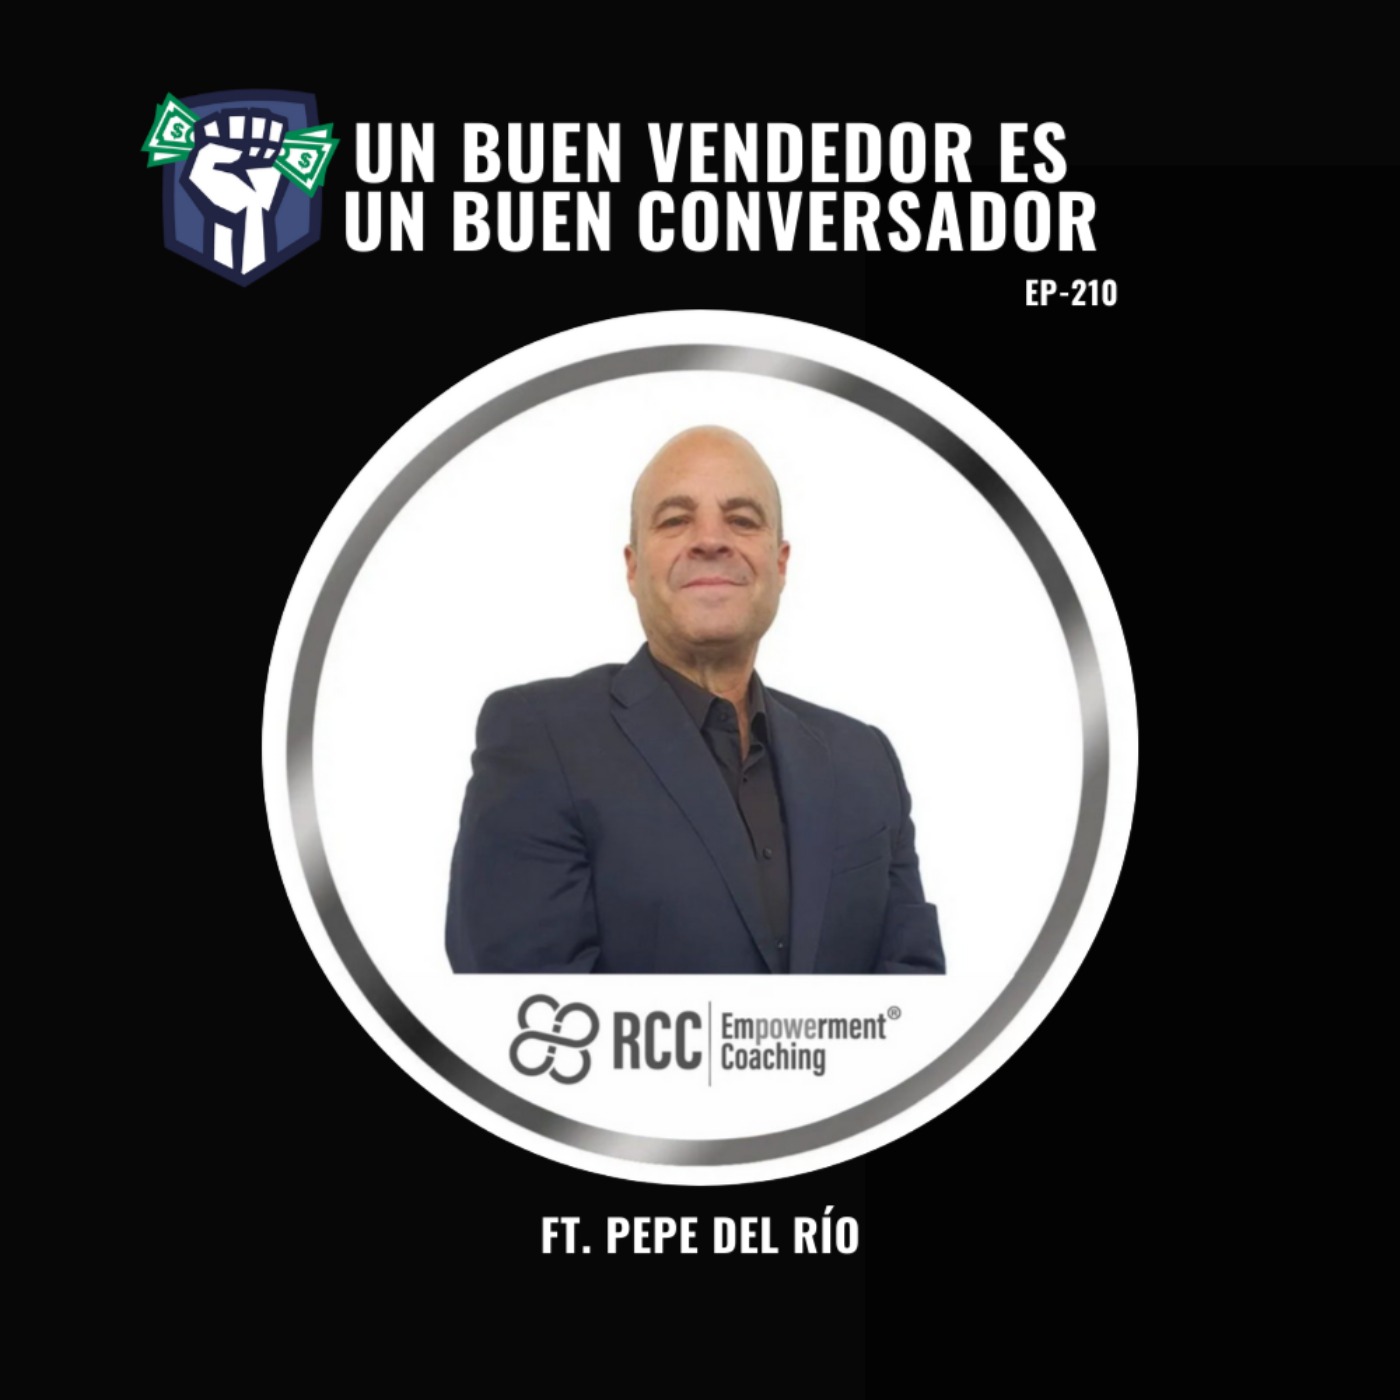 Un Buen Vendedor es un Buen Conversador (Ft. Coach Pepe del Río) Ep-210